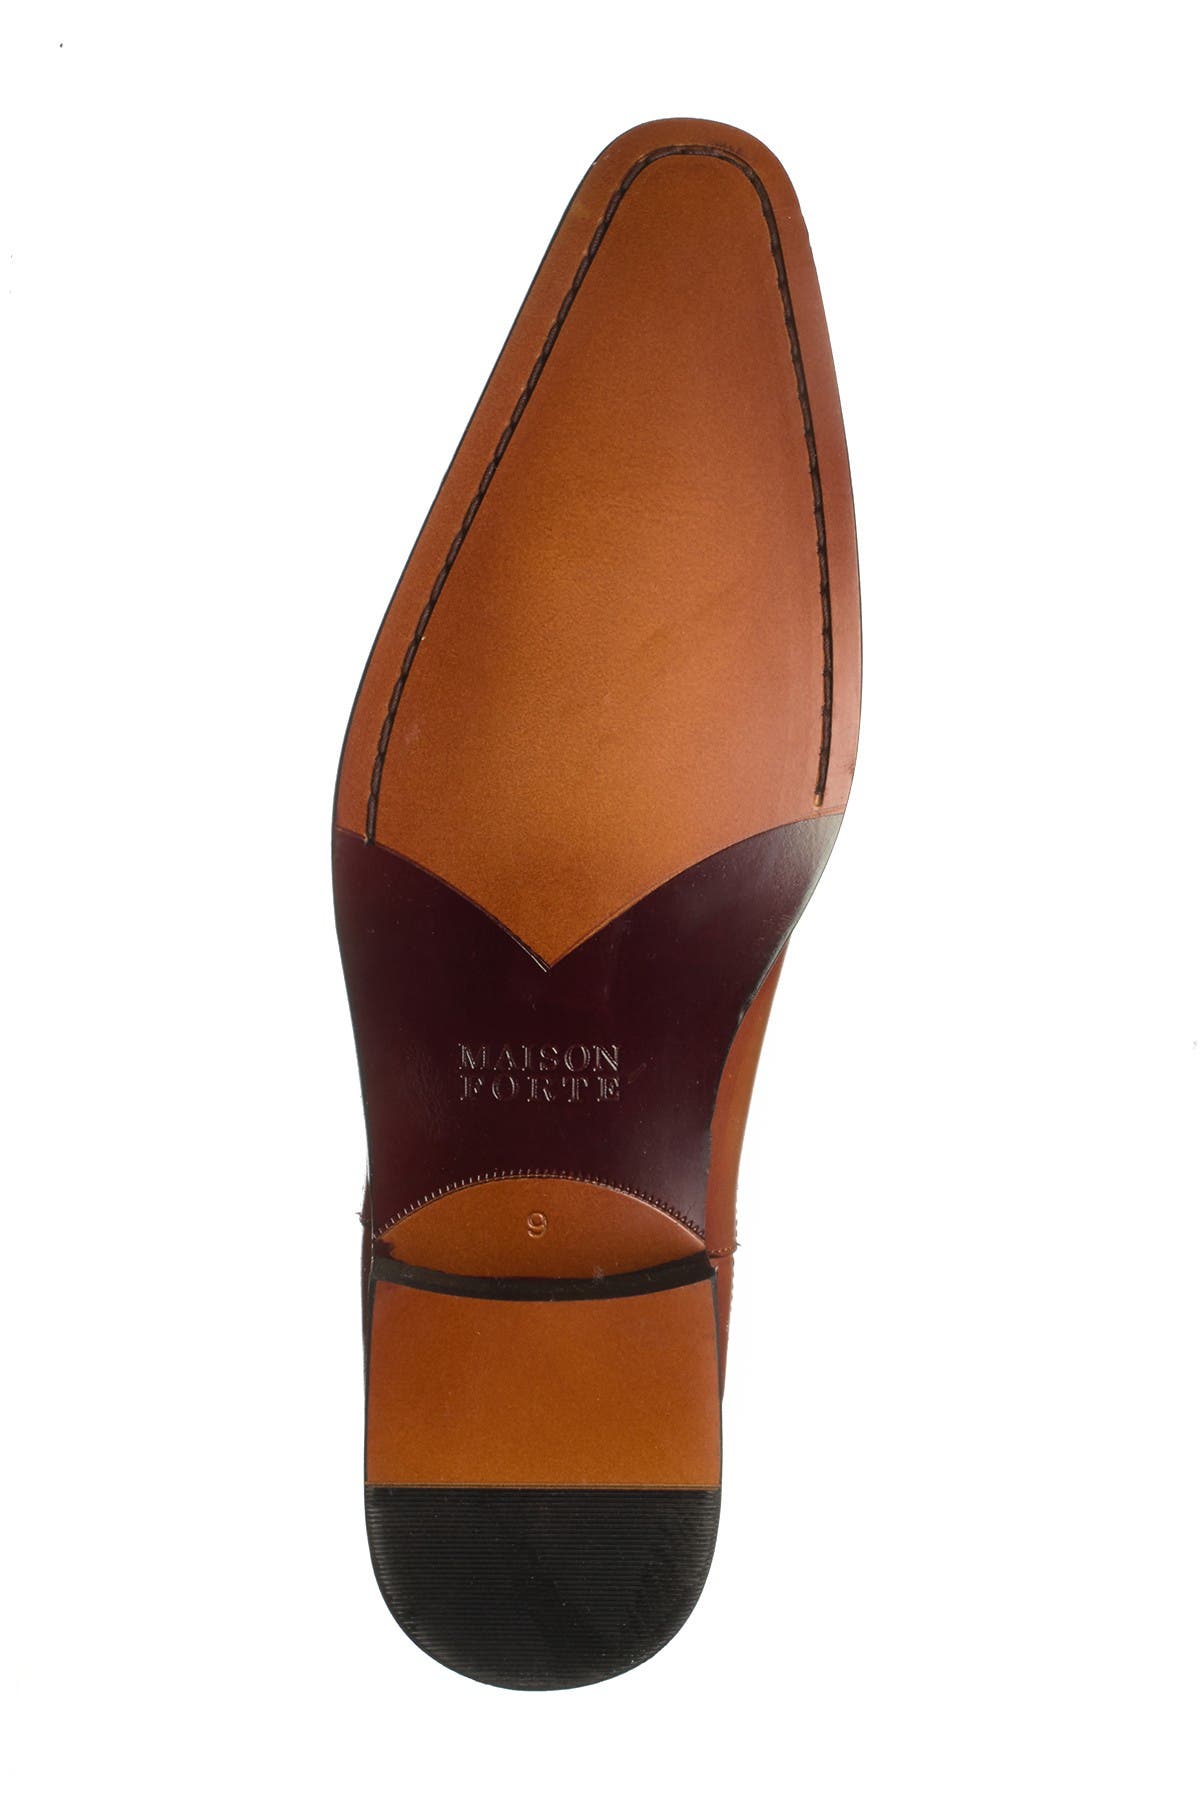 Maison Forte Ivan Chelsea Leather Boot In Cognac